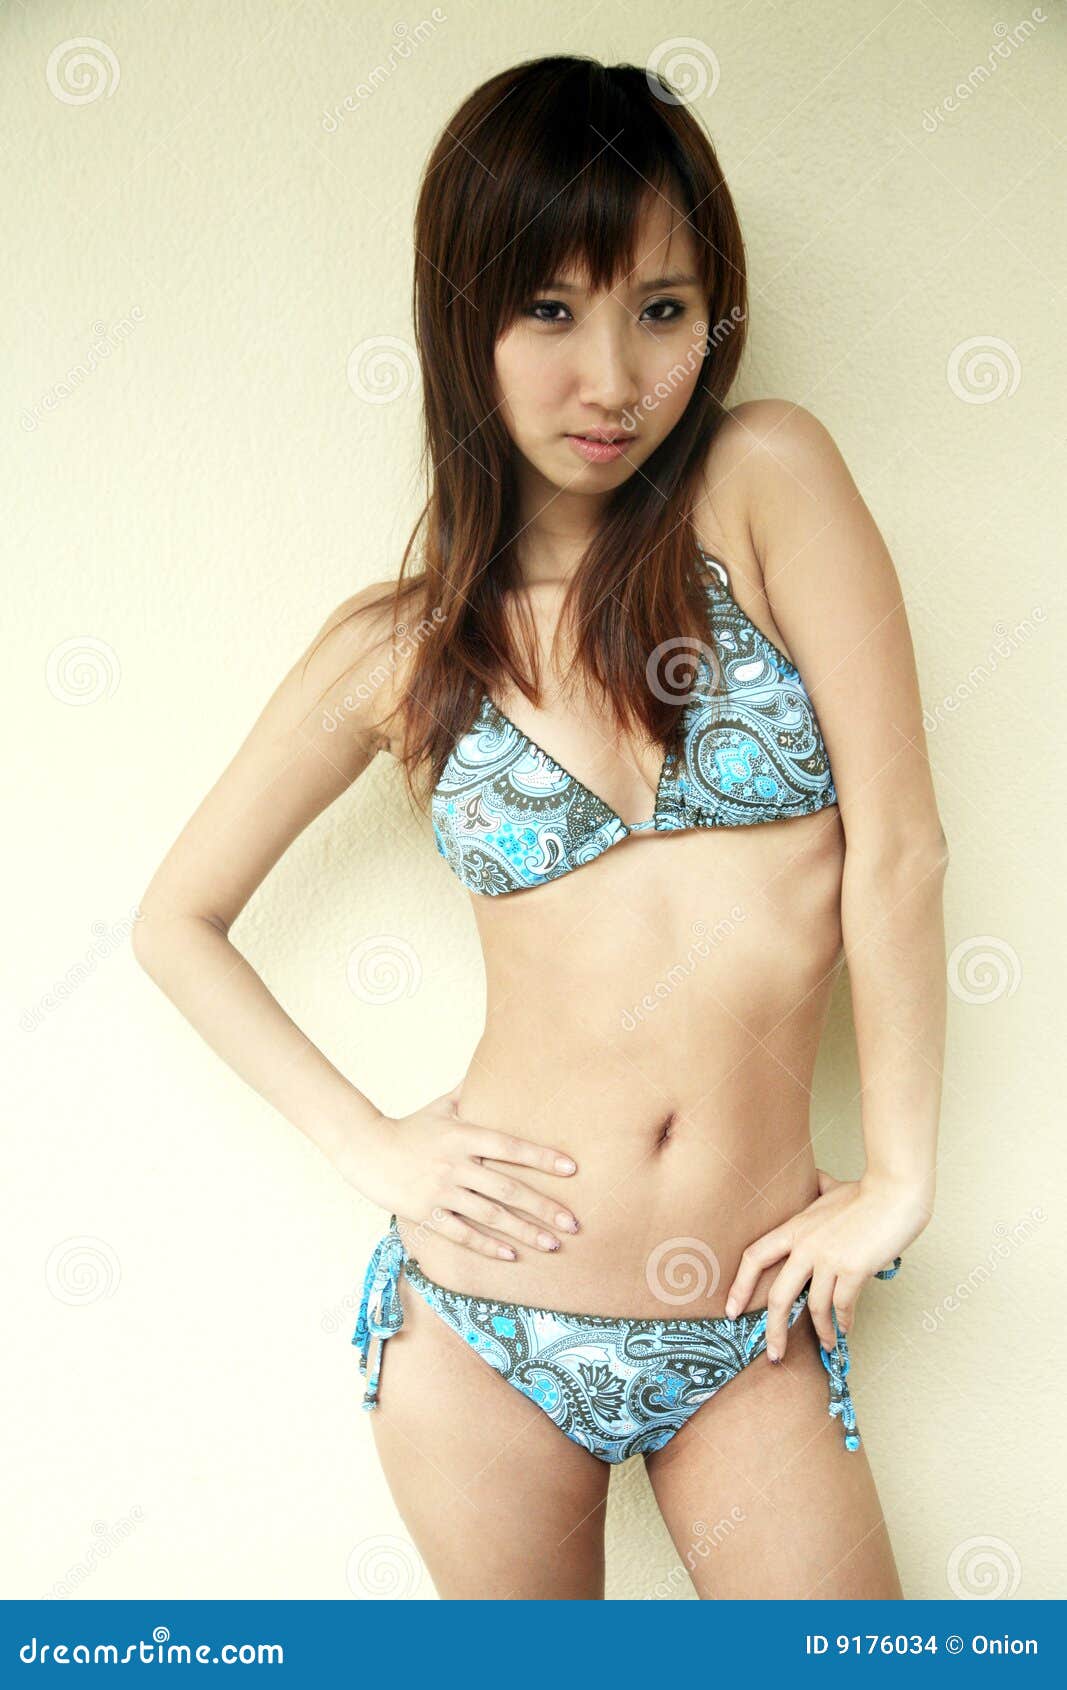 Chinese Hot Cute Teen - Cute Asian Girl in a Bikini Stock Photo - Image of body, portrait: 9176034